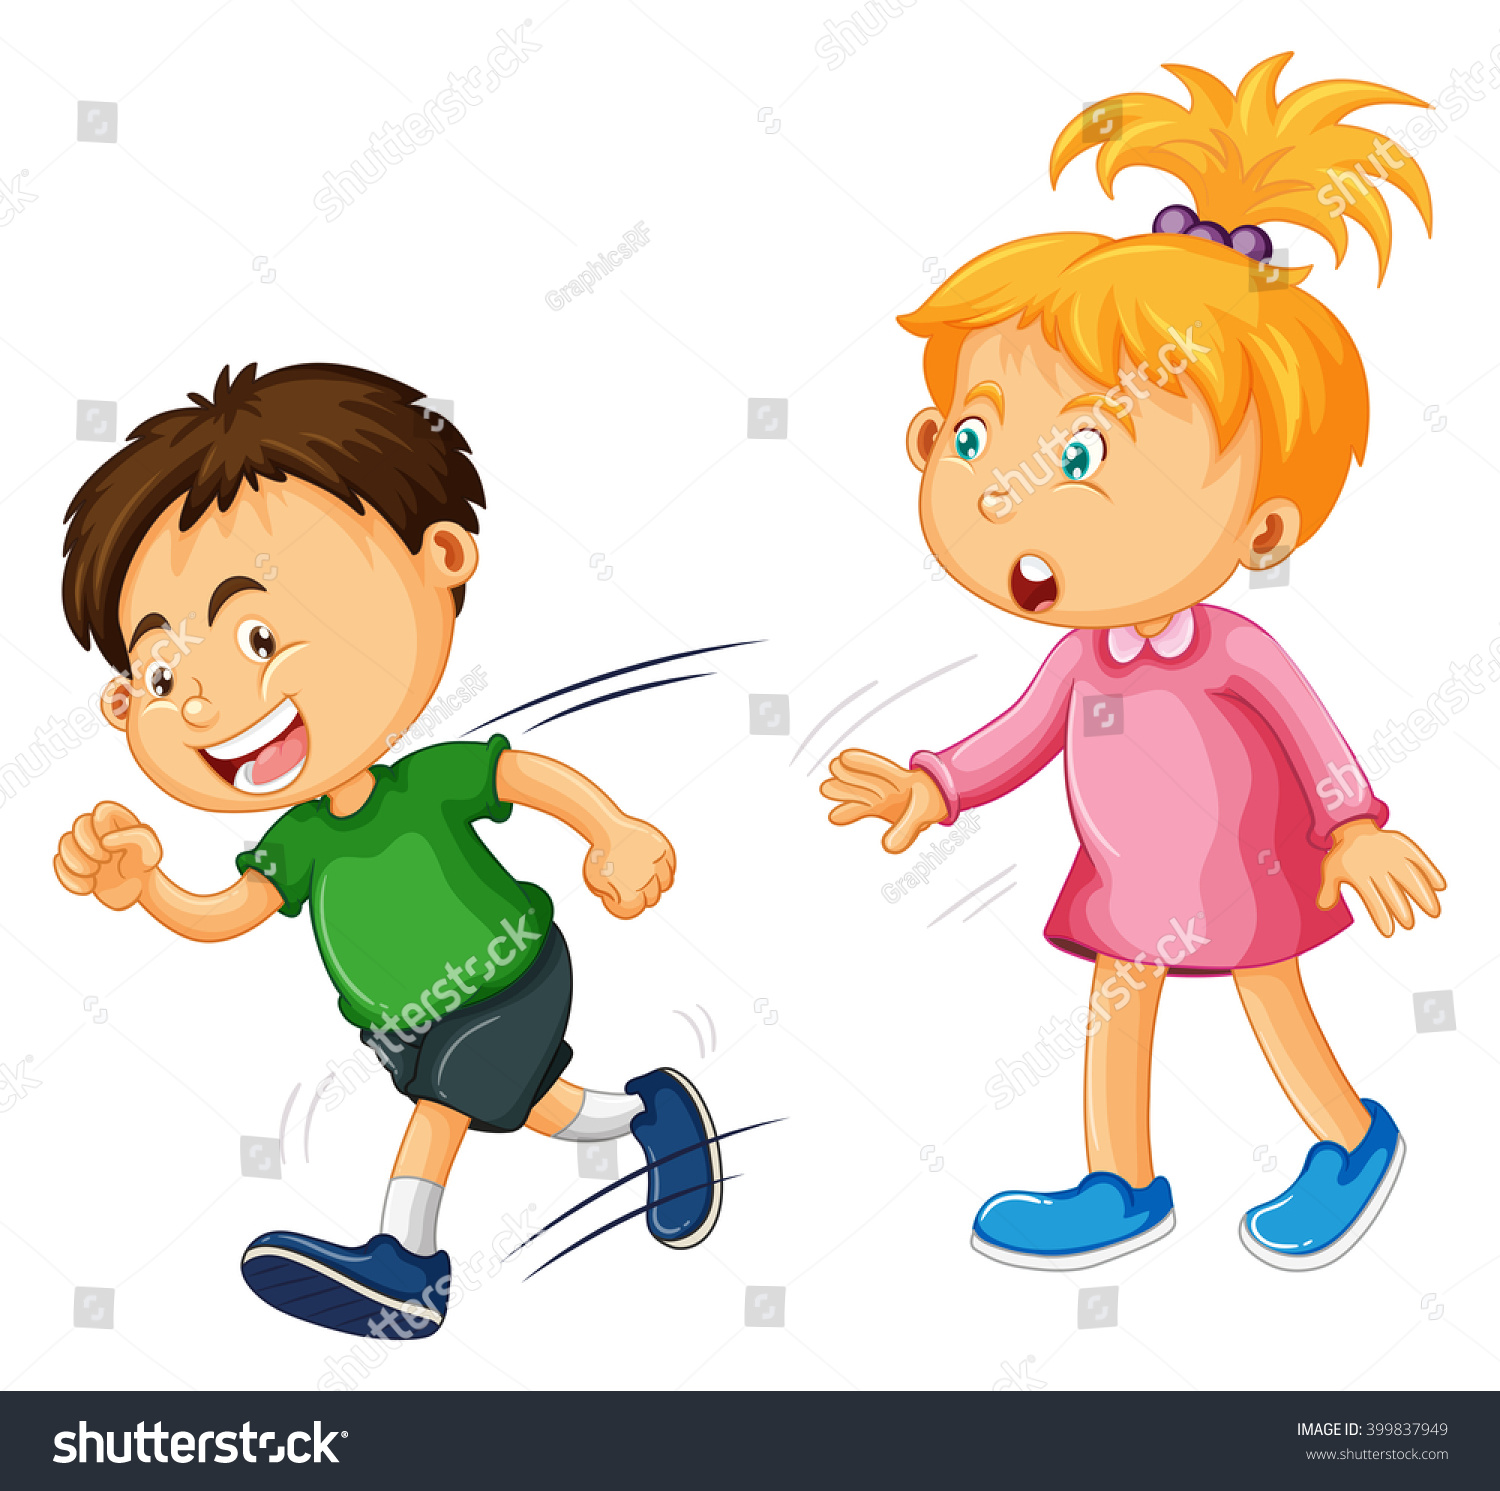 Boy And Girl On White Background Illustration - 399837949 : Shutterstock